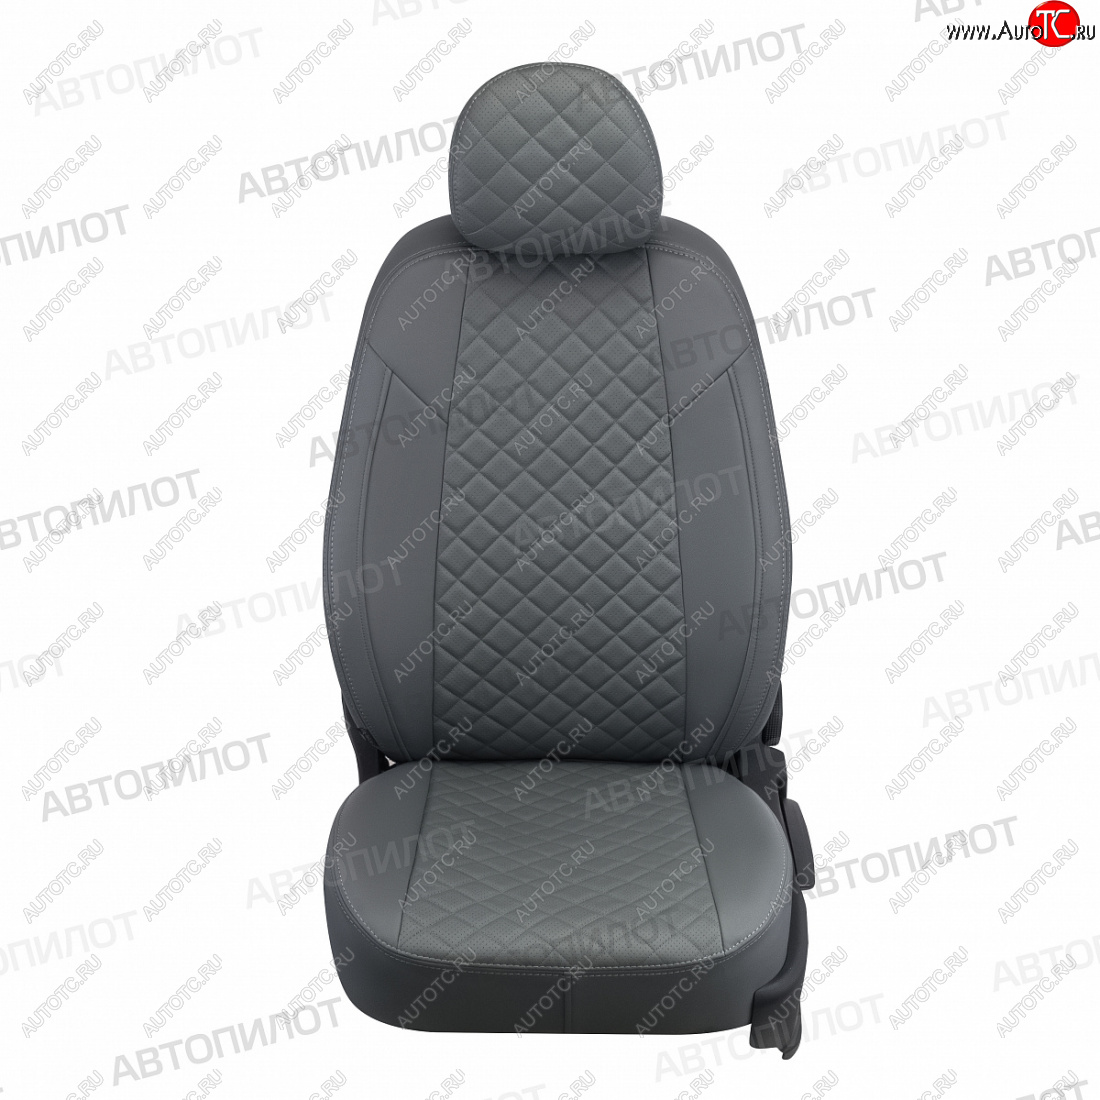 13 999 р. Чехлы сидений (экокожа) Автопилот Ромб  KIA Optima  3 TF (2010-2016) (серый)